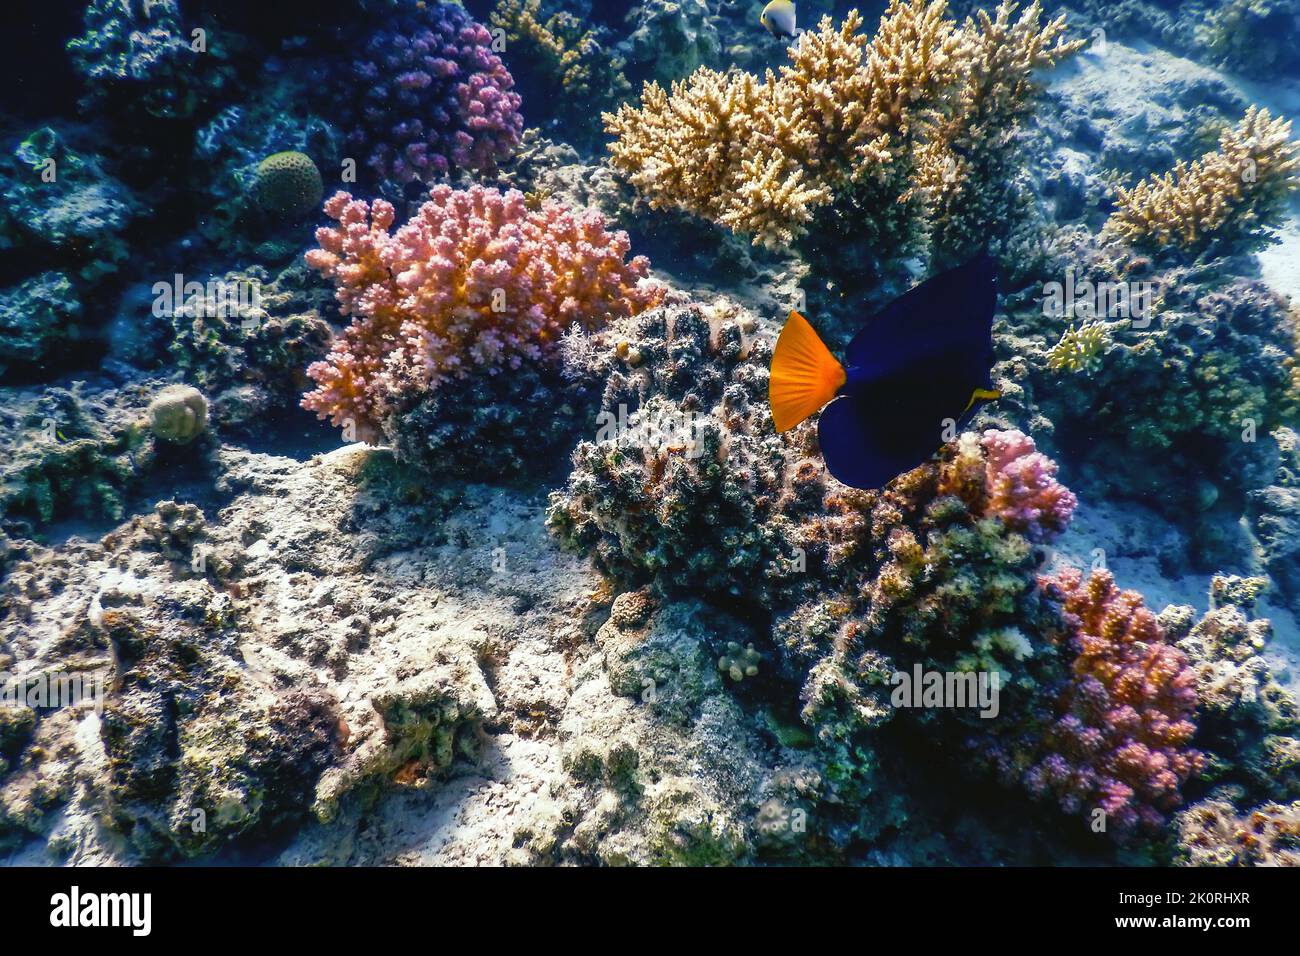 Yellowtail tang, Yellowtail surgeonfish (Zebrasoma xanthurum) Tropical waters, Marine life Stock Photo